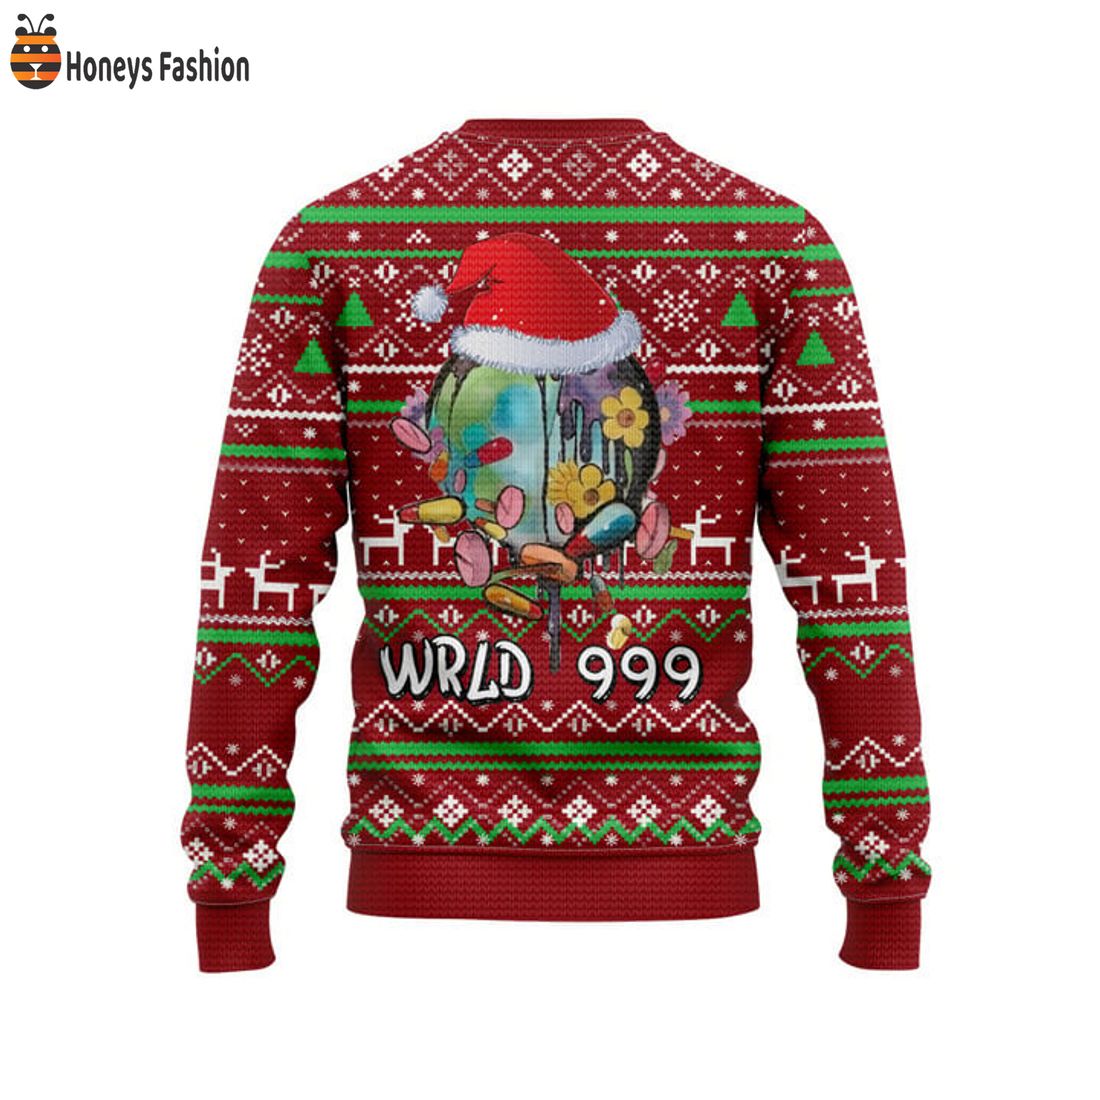 HOT Juice Wrld 999 Merry Xmas Ugly Christmas Sweater